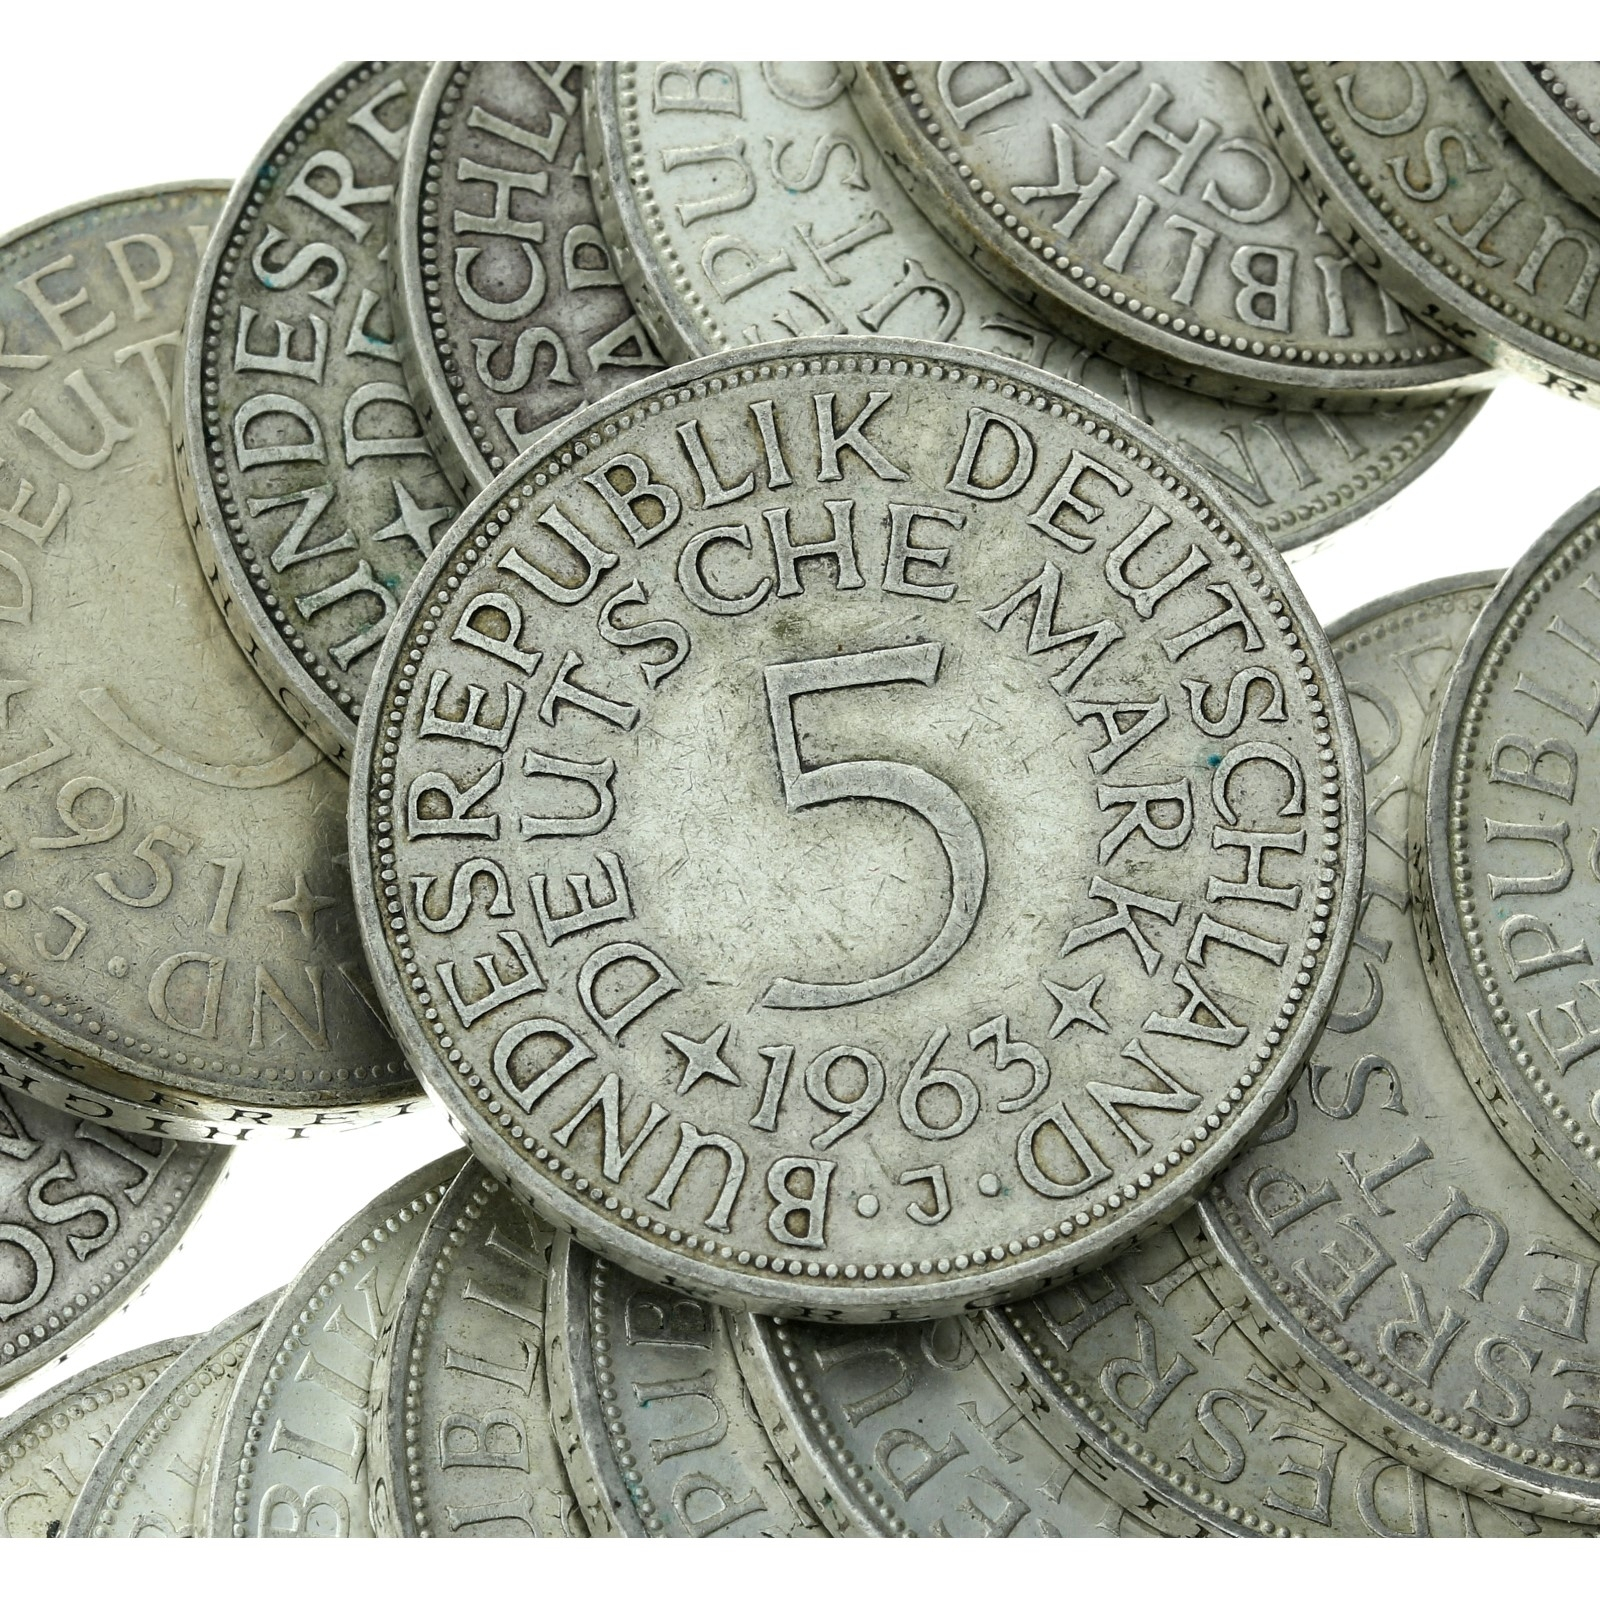 Germany - 5 DM - silver coins - 50 pcs - 350 gram fine silver